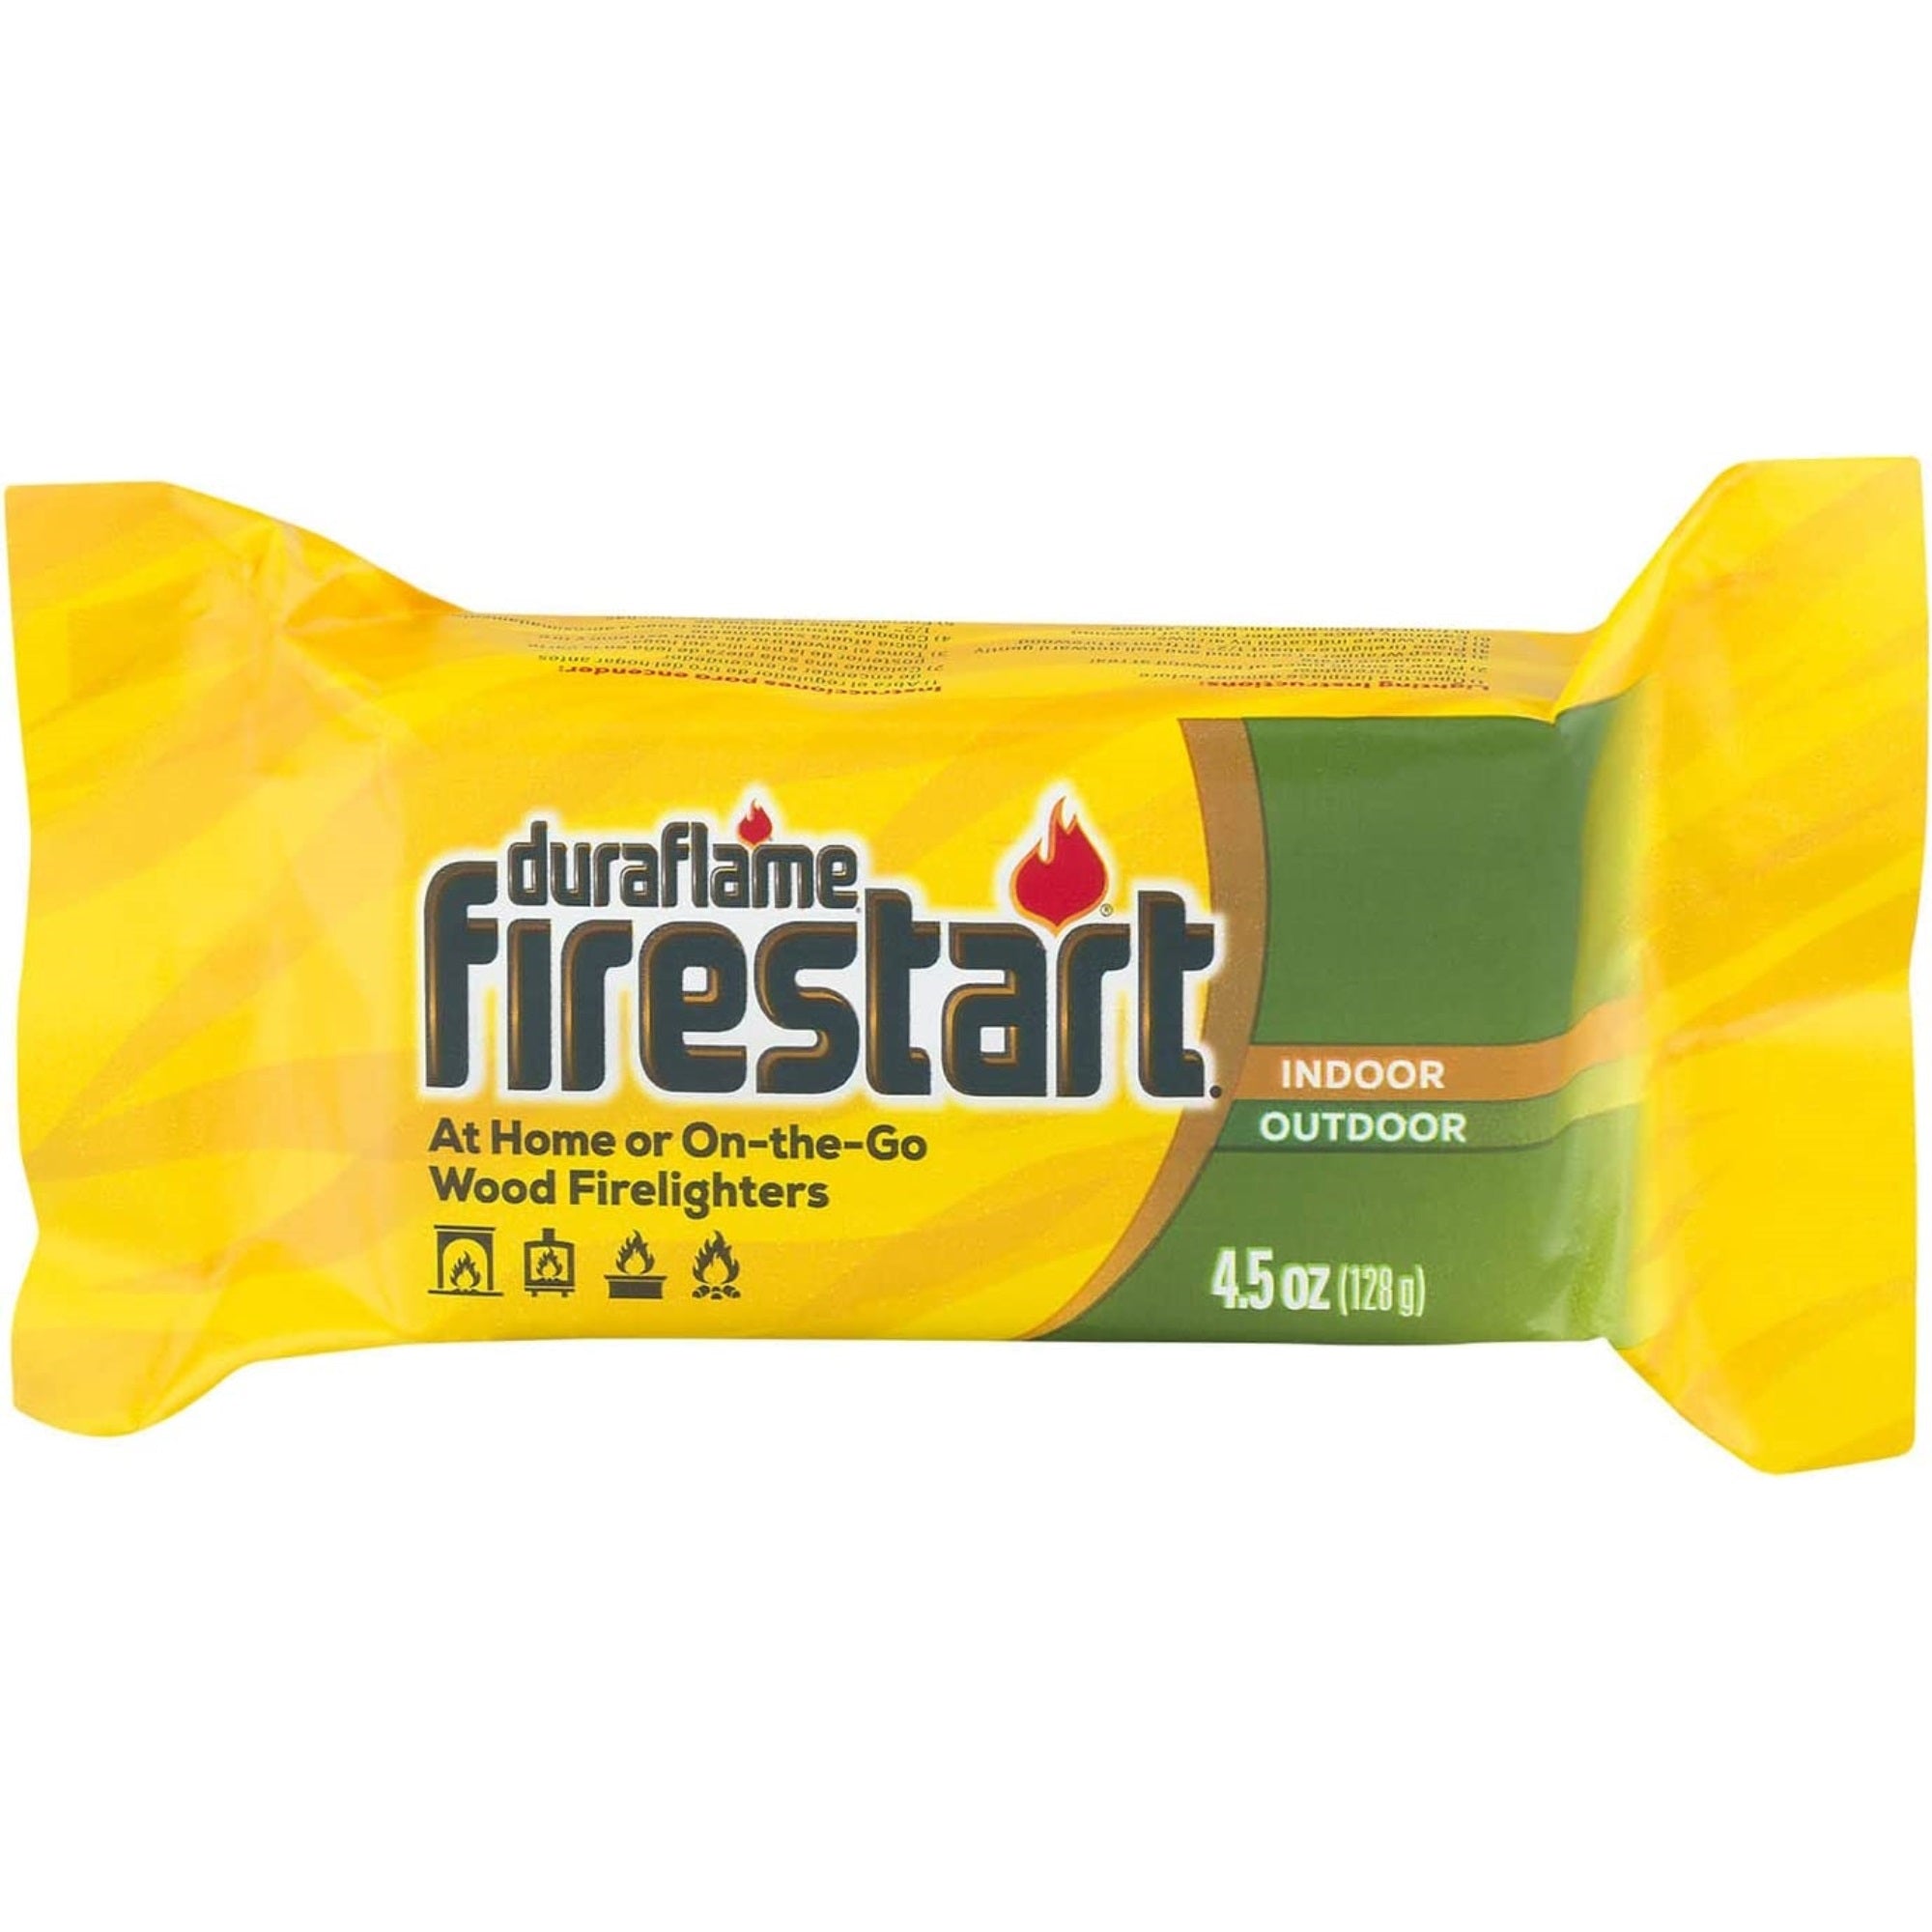 Duraflame Firestart Indoor/Outdoor Wood Firelighters, 12 Pack, 4.5 Ounces Each